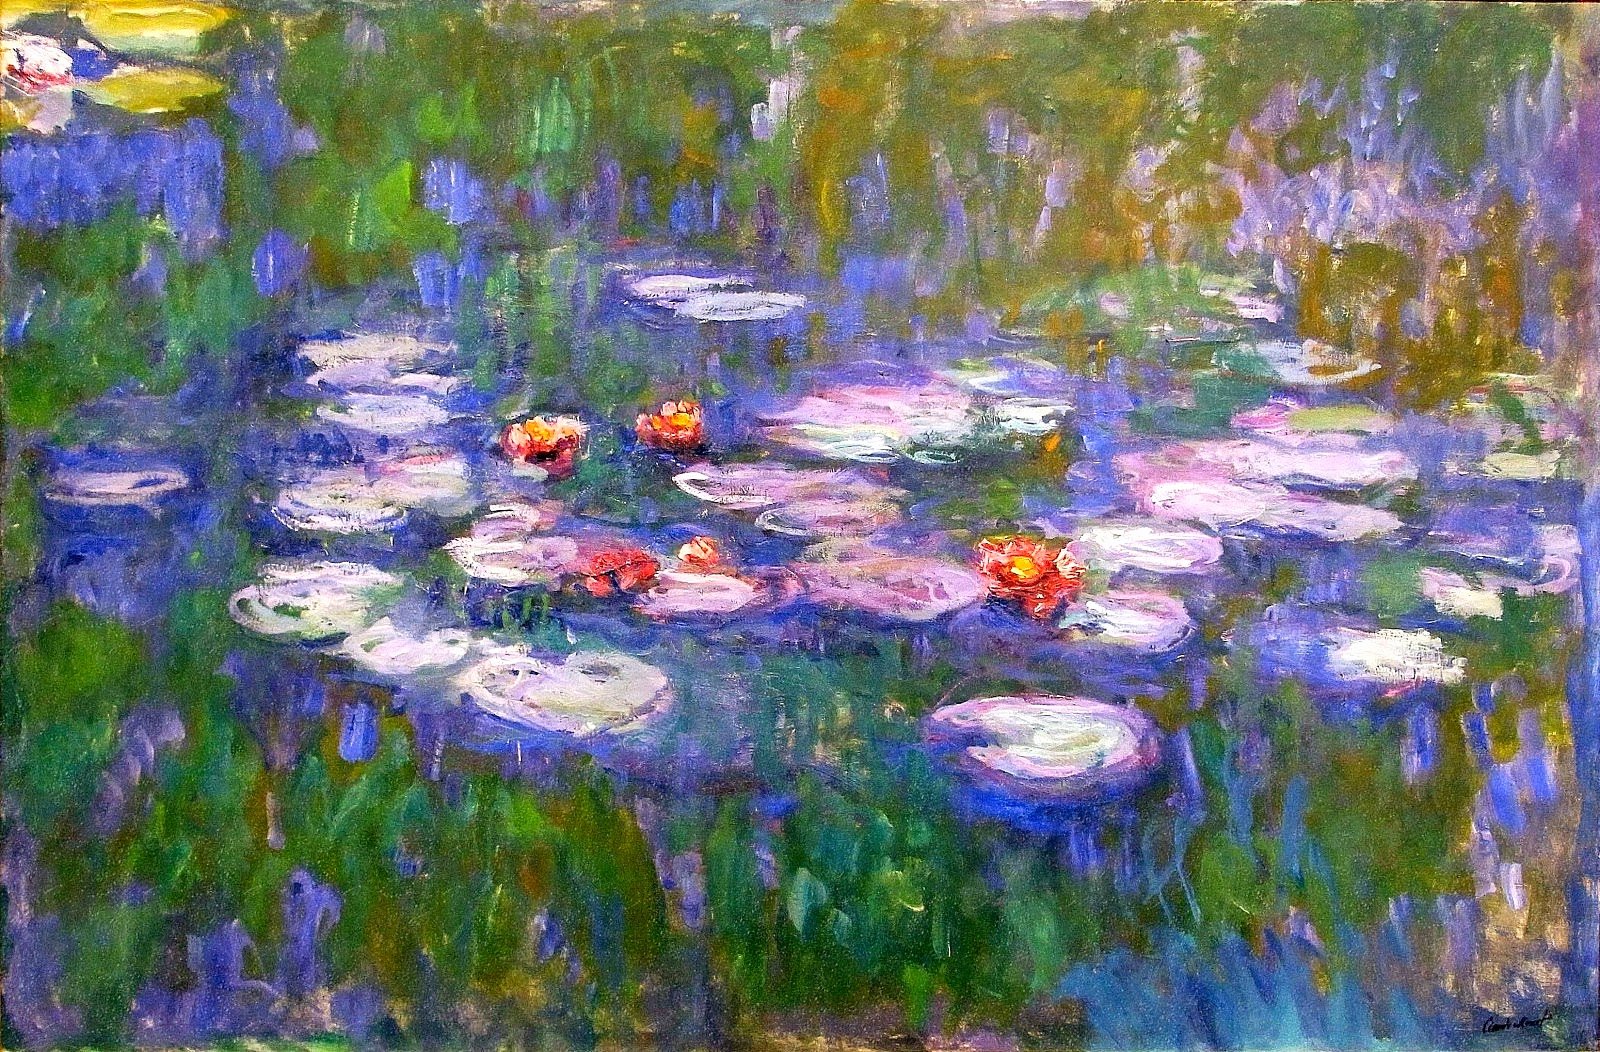 Monet Images Of Paintings Lovely Artists for Kids Kindergarten Claude Monet